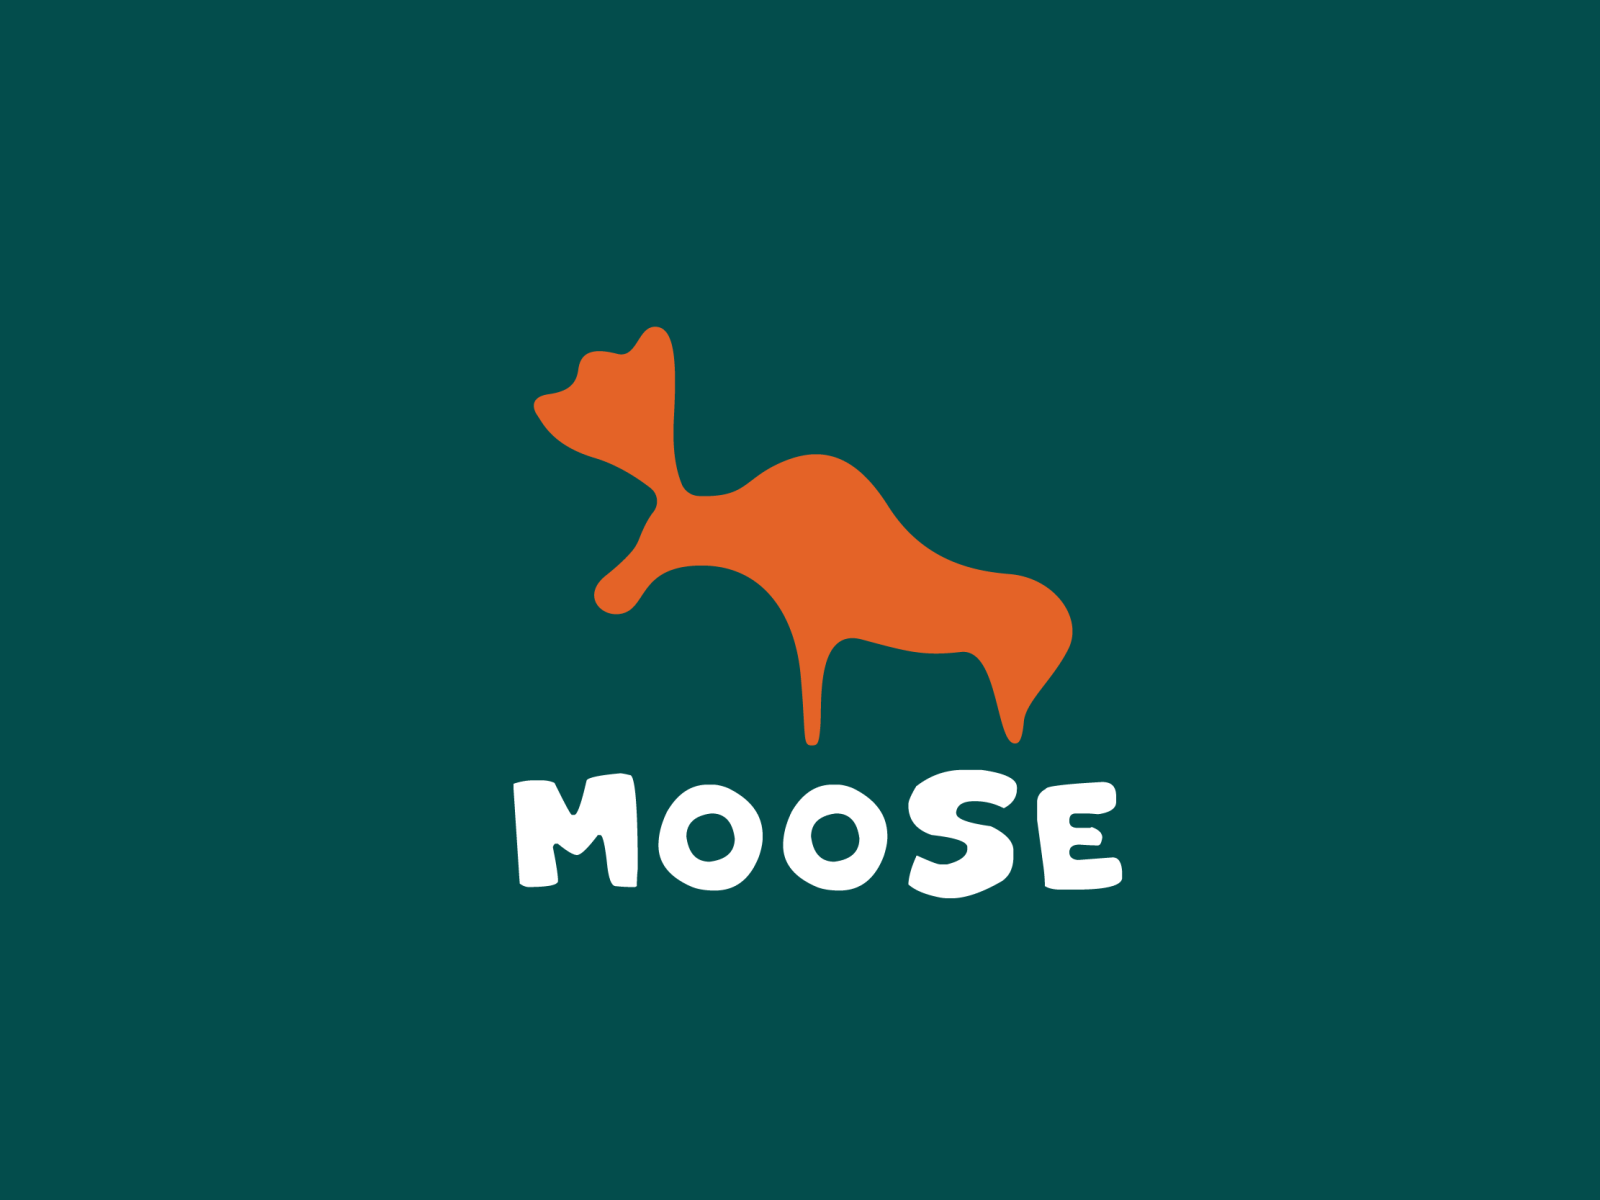 Moose Logo by saha subrata on Dribbble